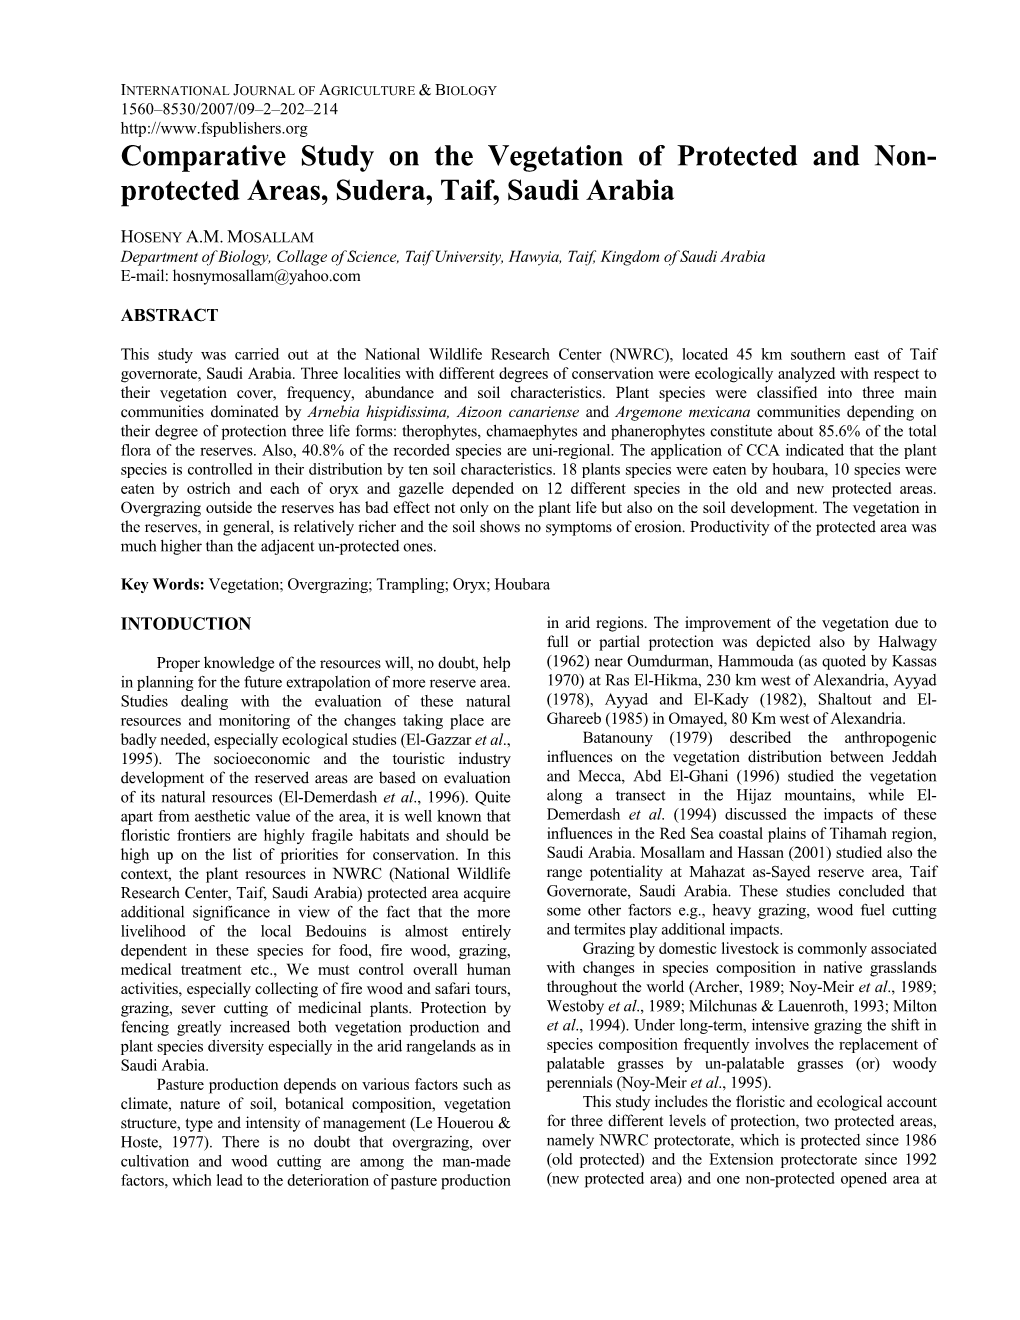 Protected Areas, Sudera, Taif, Saudi Arabia